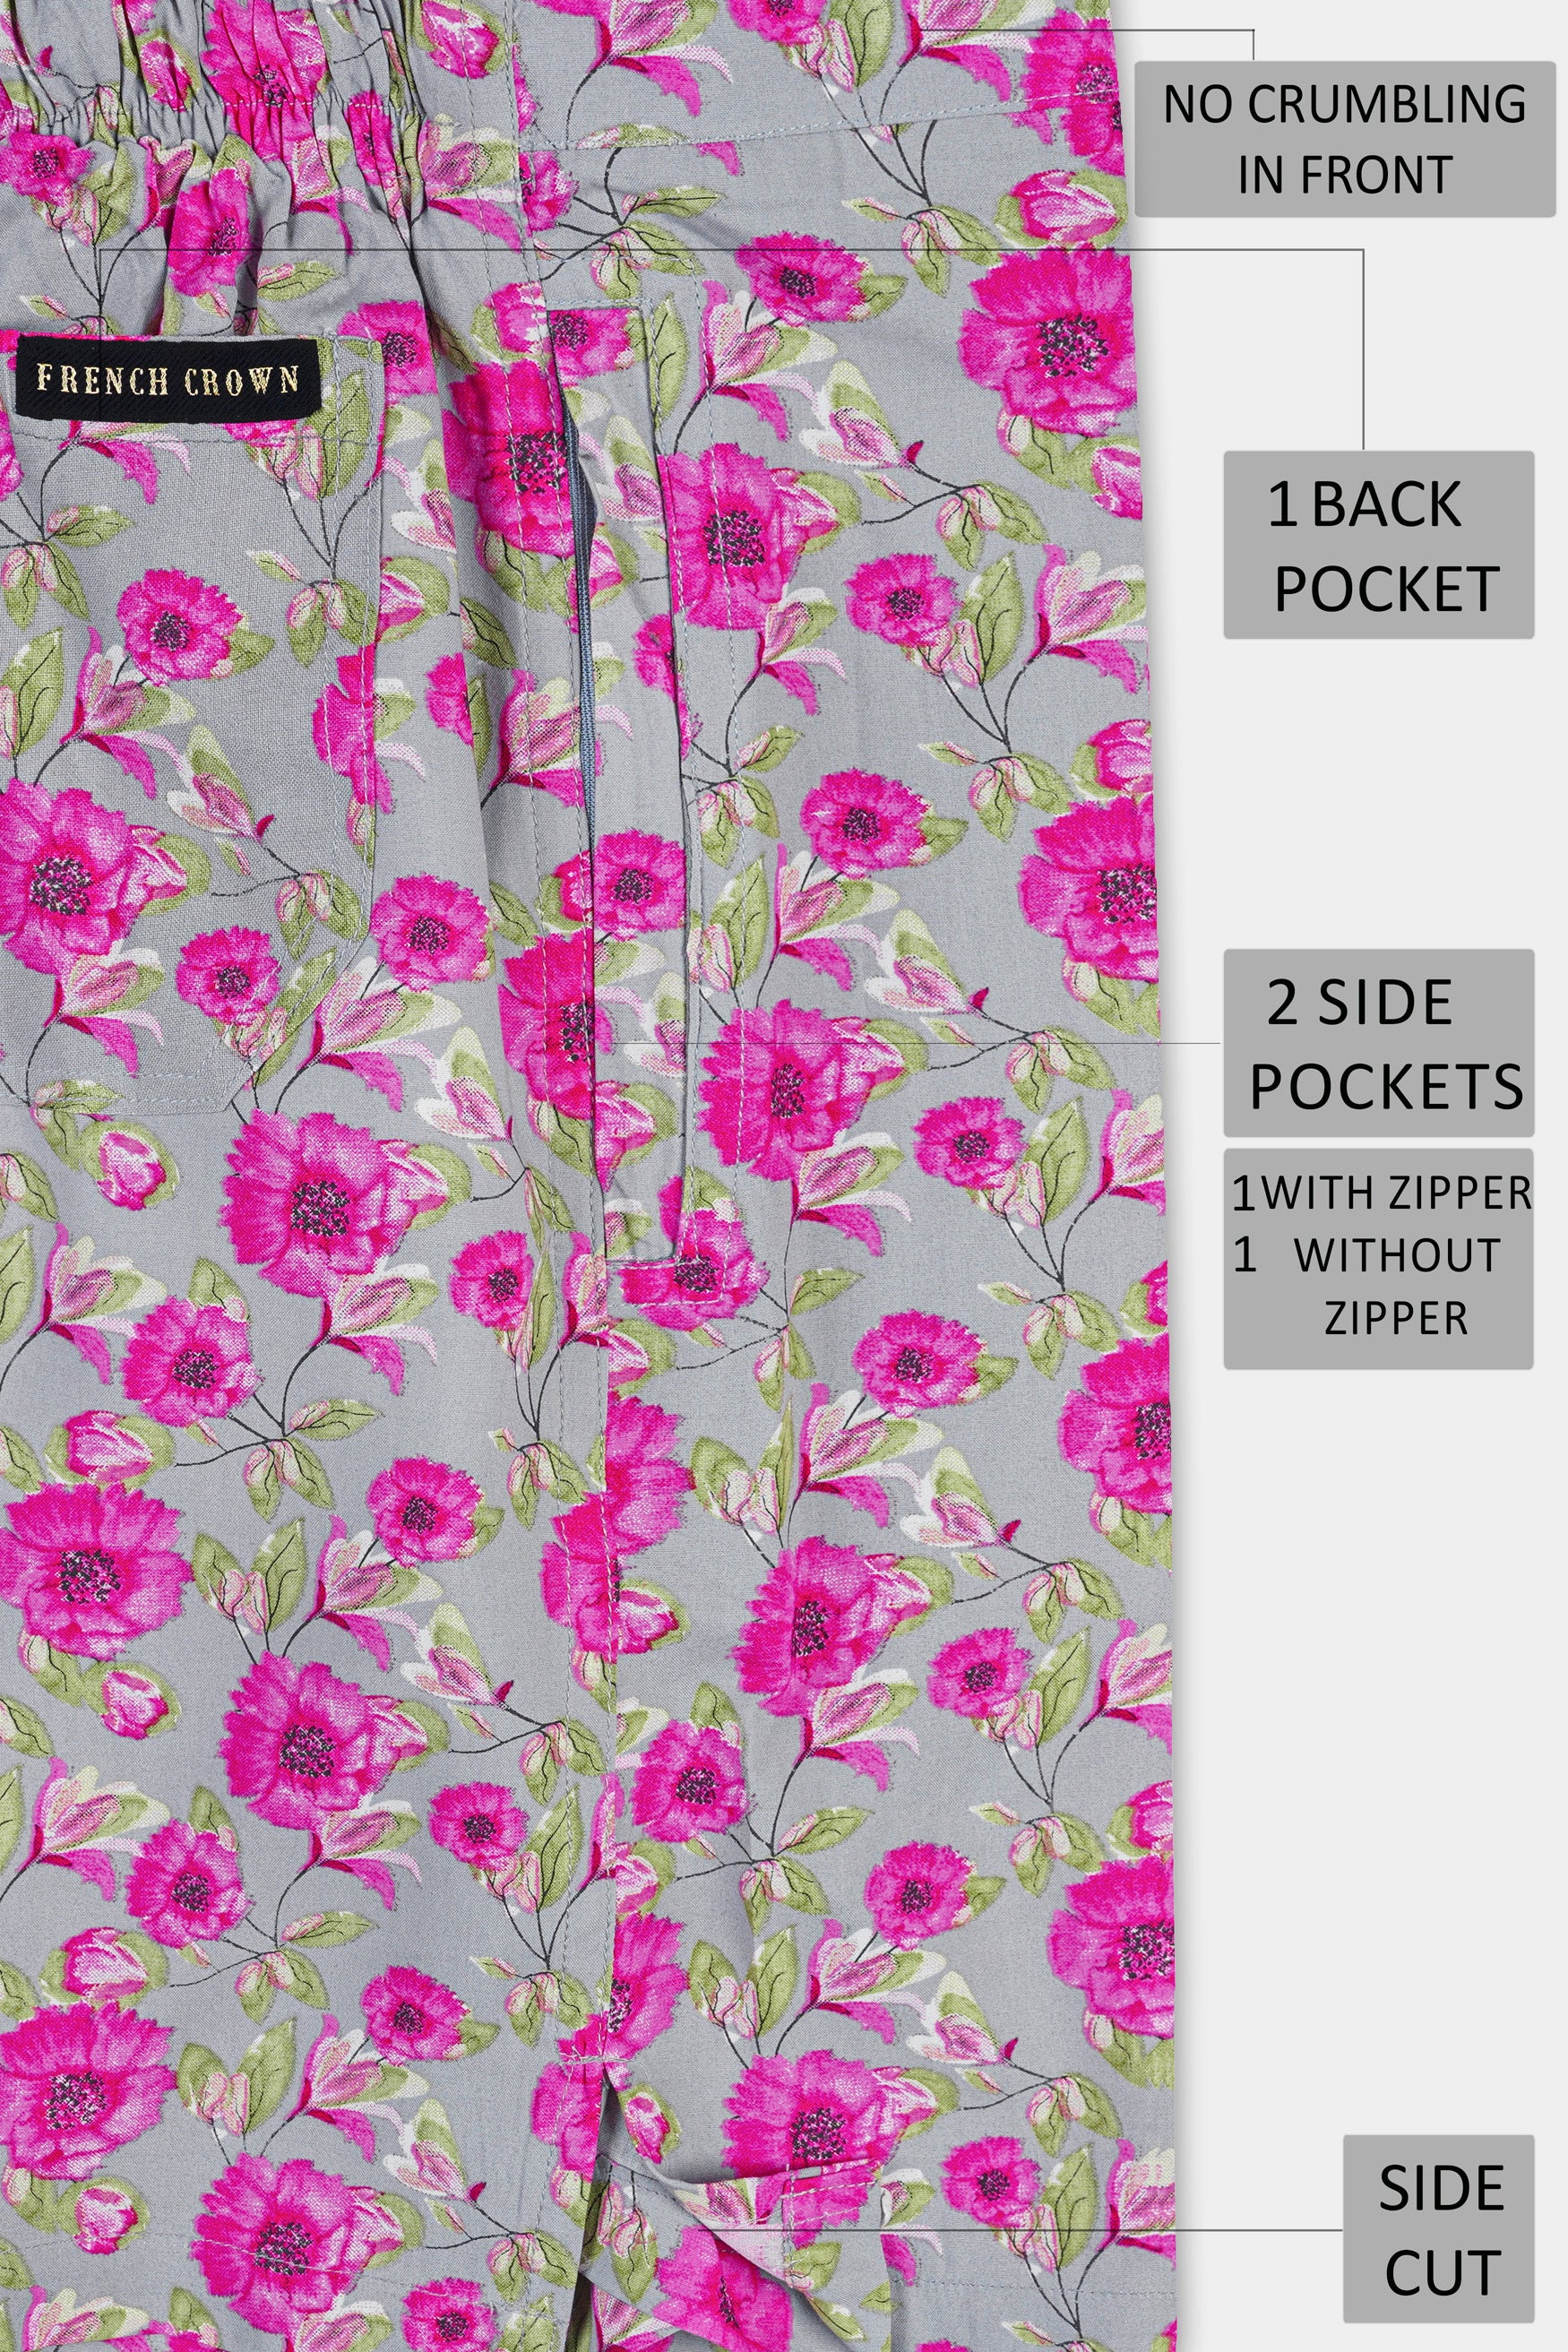 Noble Gray with Hopbush Pink Multicolor Floral Printed Premium Tencel Shorts SR369-28, SR369-30, SR369-32, SR369-34, SR369-36, SR369-38, SR369-40, SR369-42, SR369-44